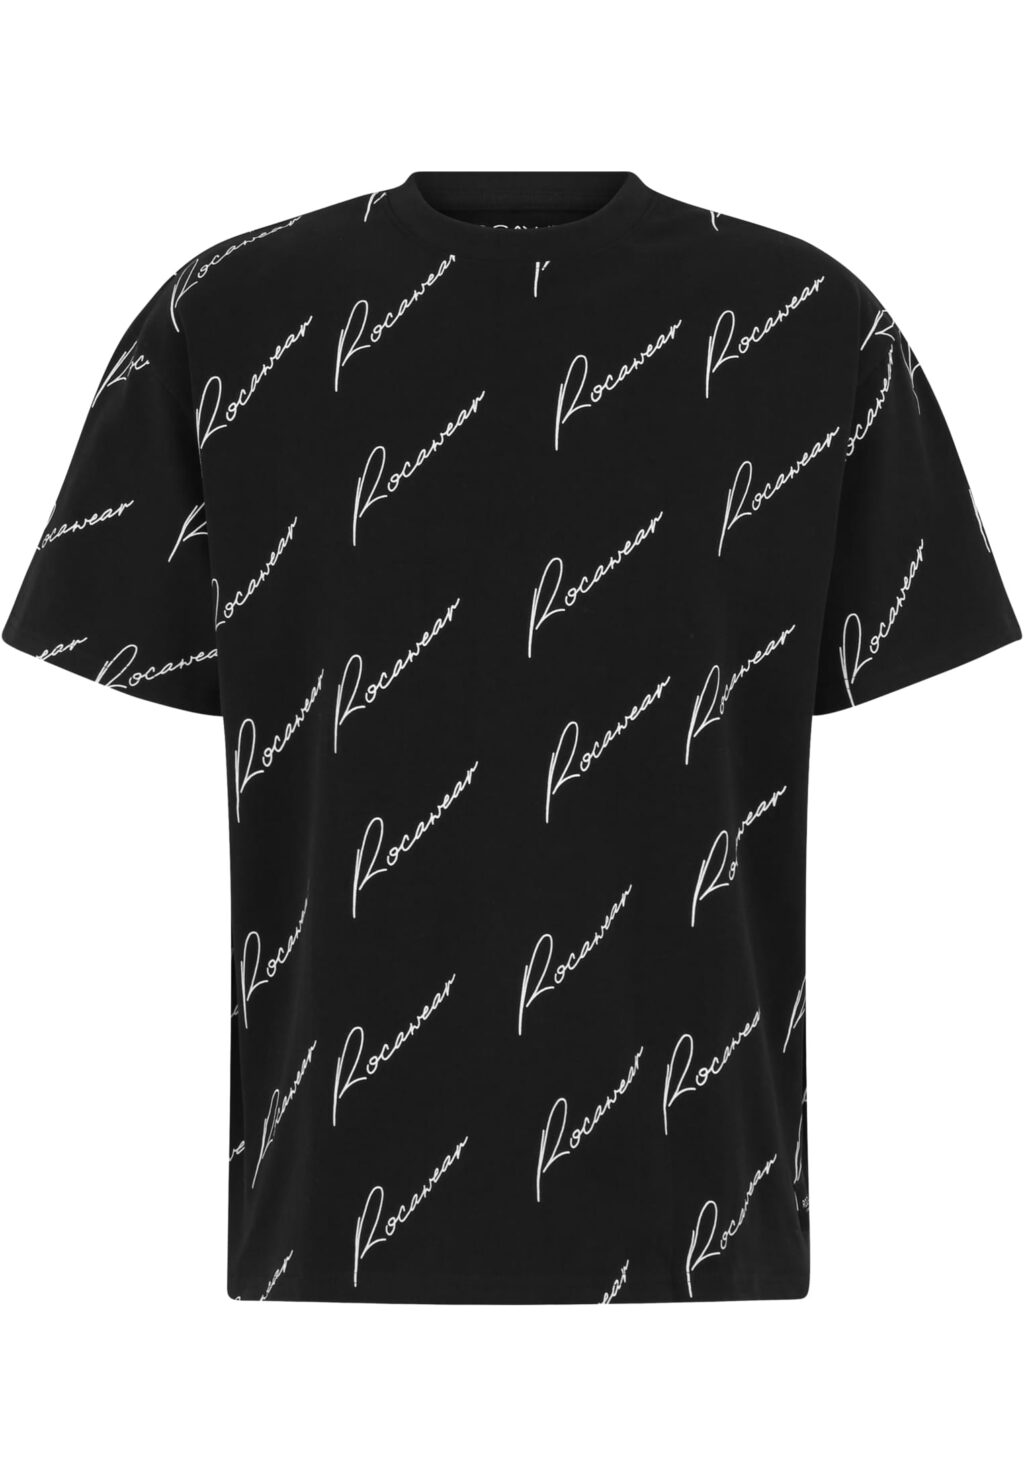 Rocawear Atlanta T-Shirt black RWTS087